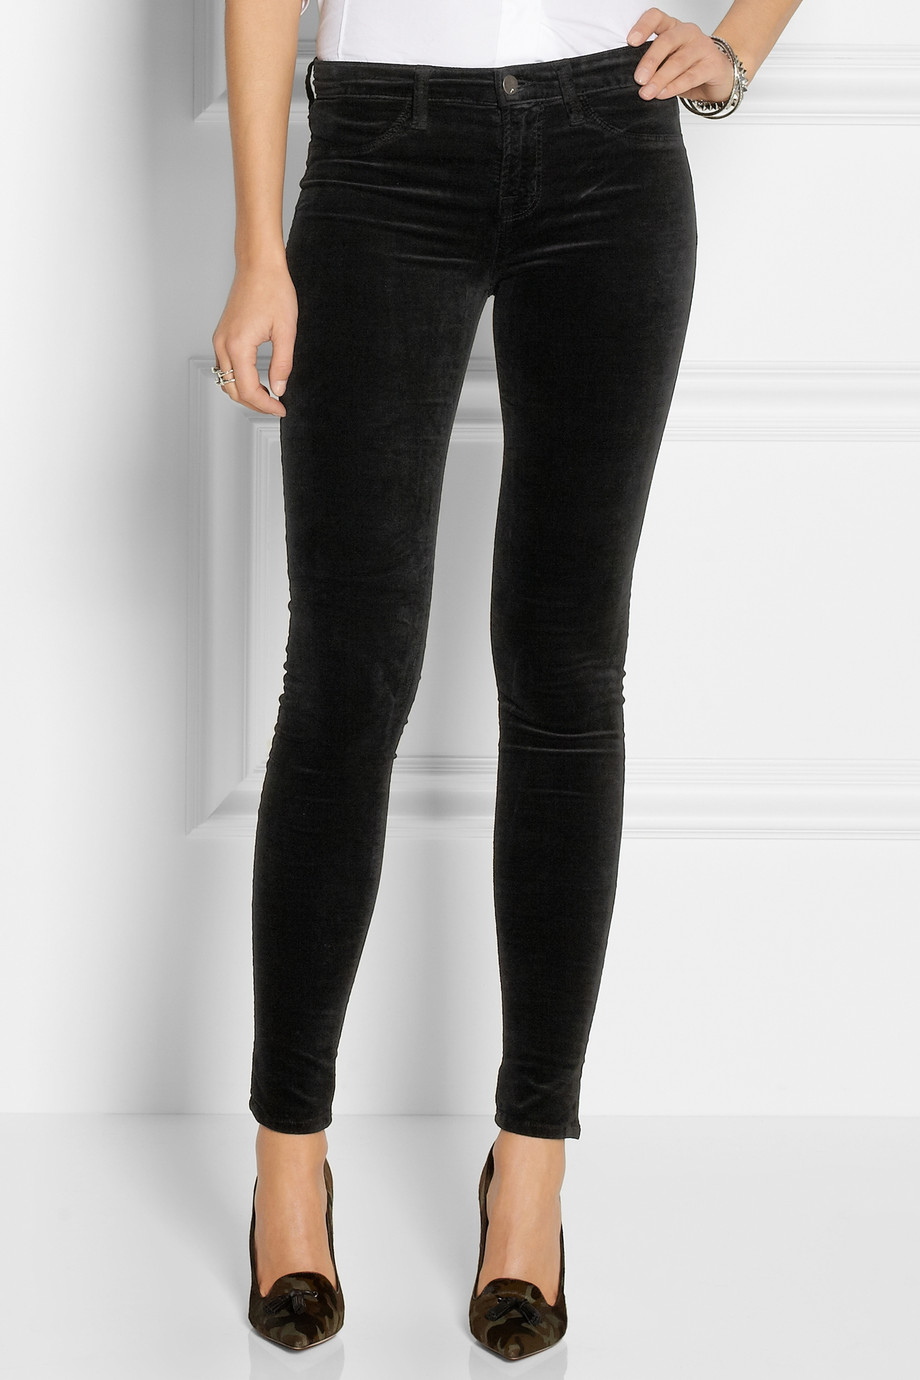 J Brand 815 Midrise Velvet Skinny Jeans in Black | Lyst Canada